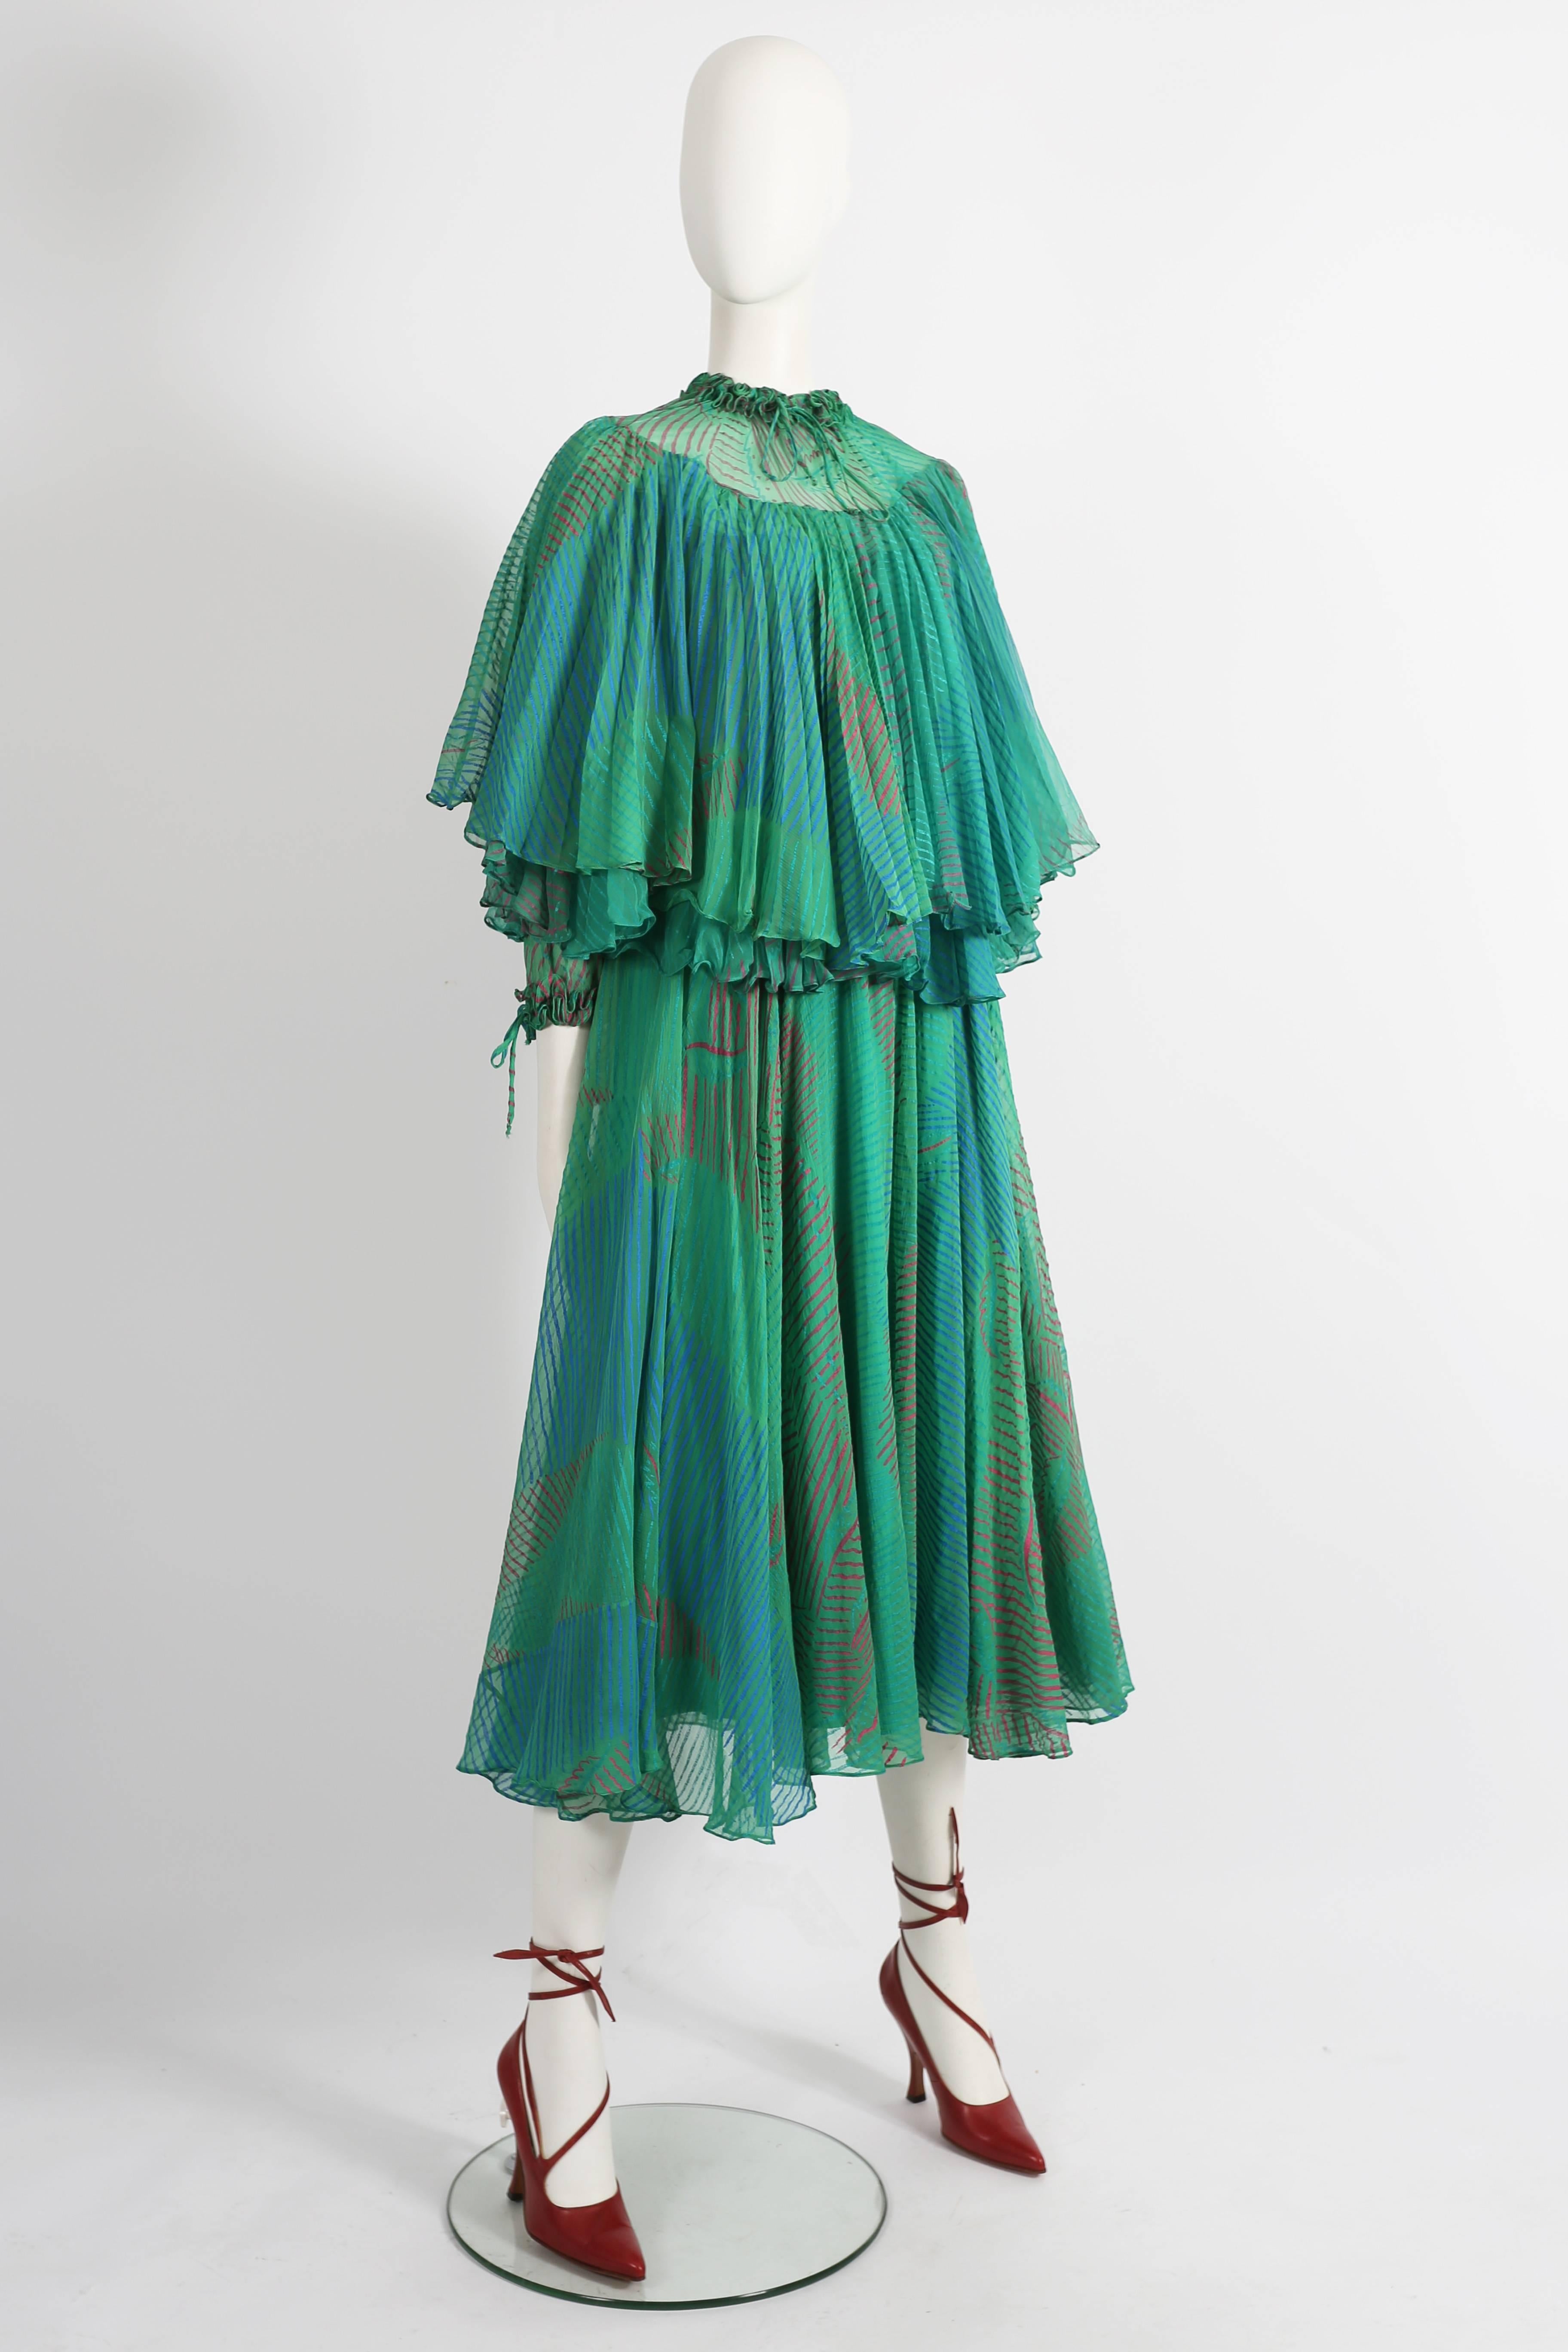 Ossie Clark Celia Birtwell couture silk chiffon screen-print dress, circa 1976 2